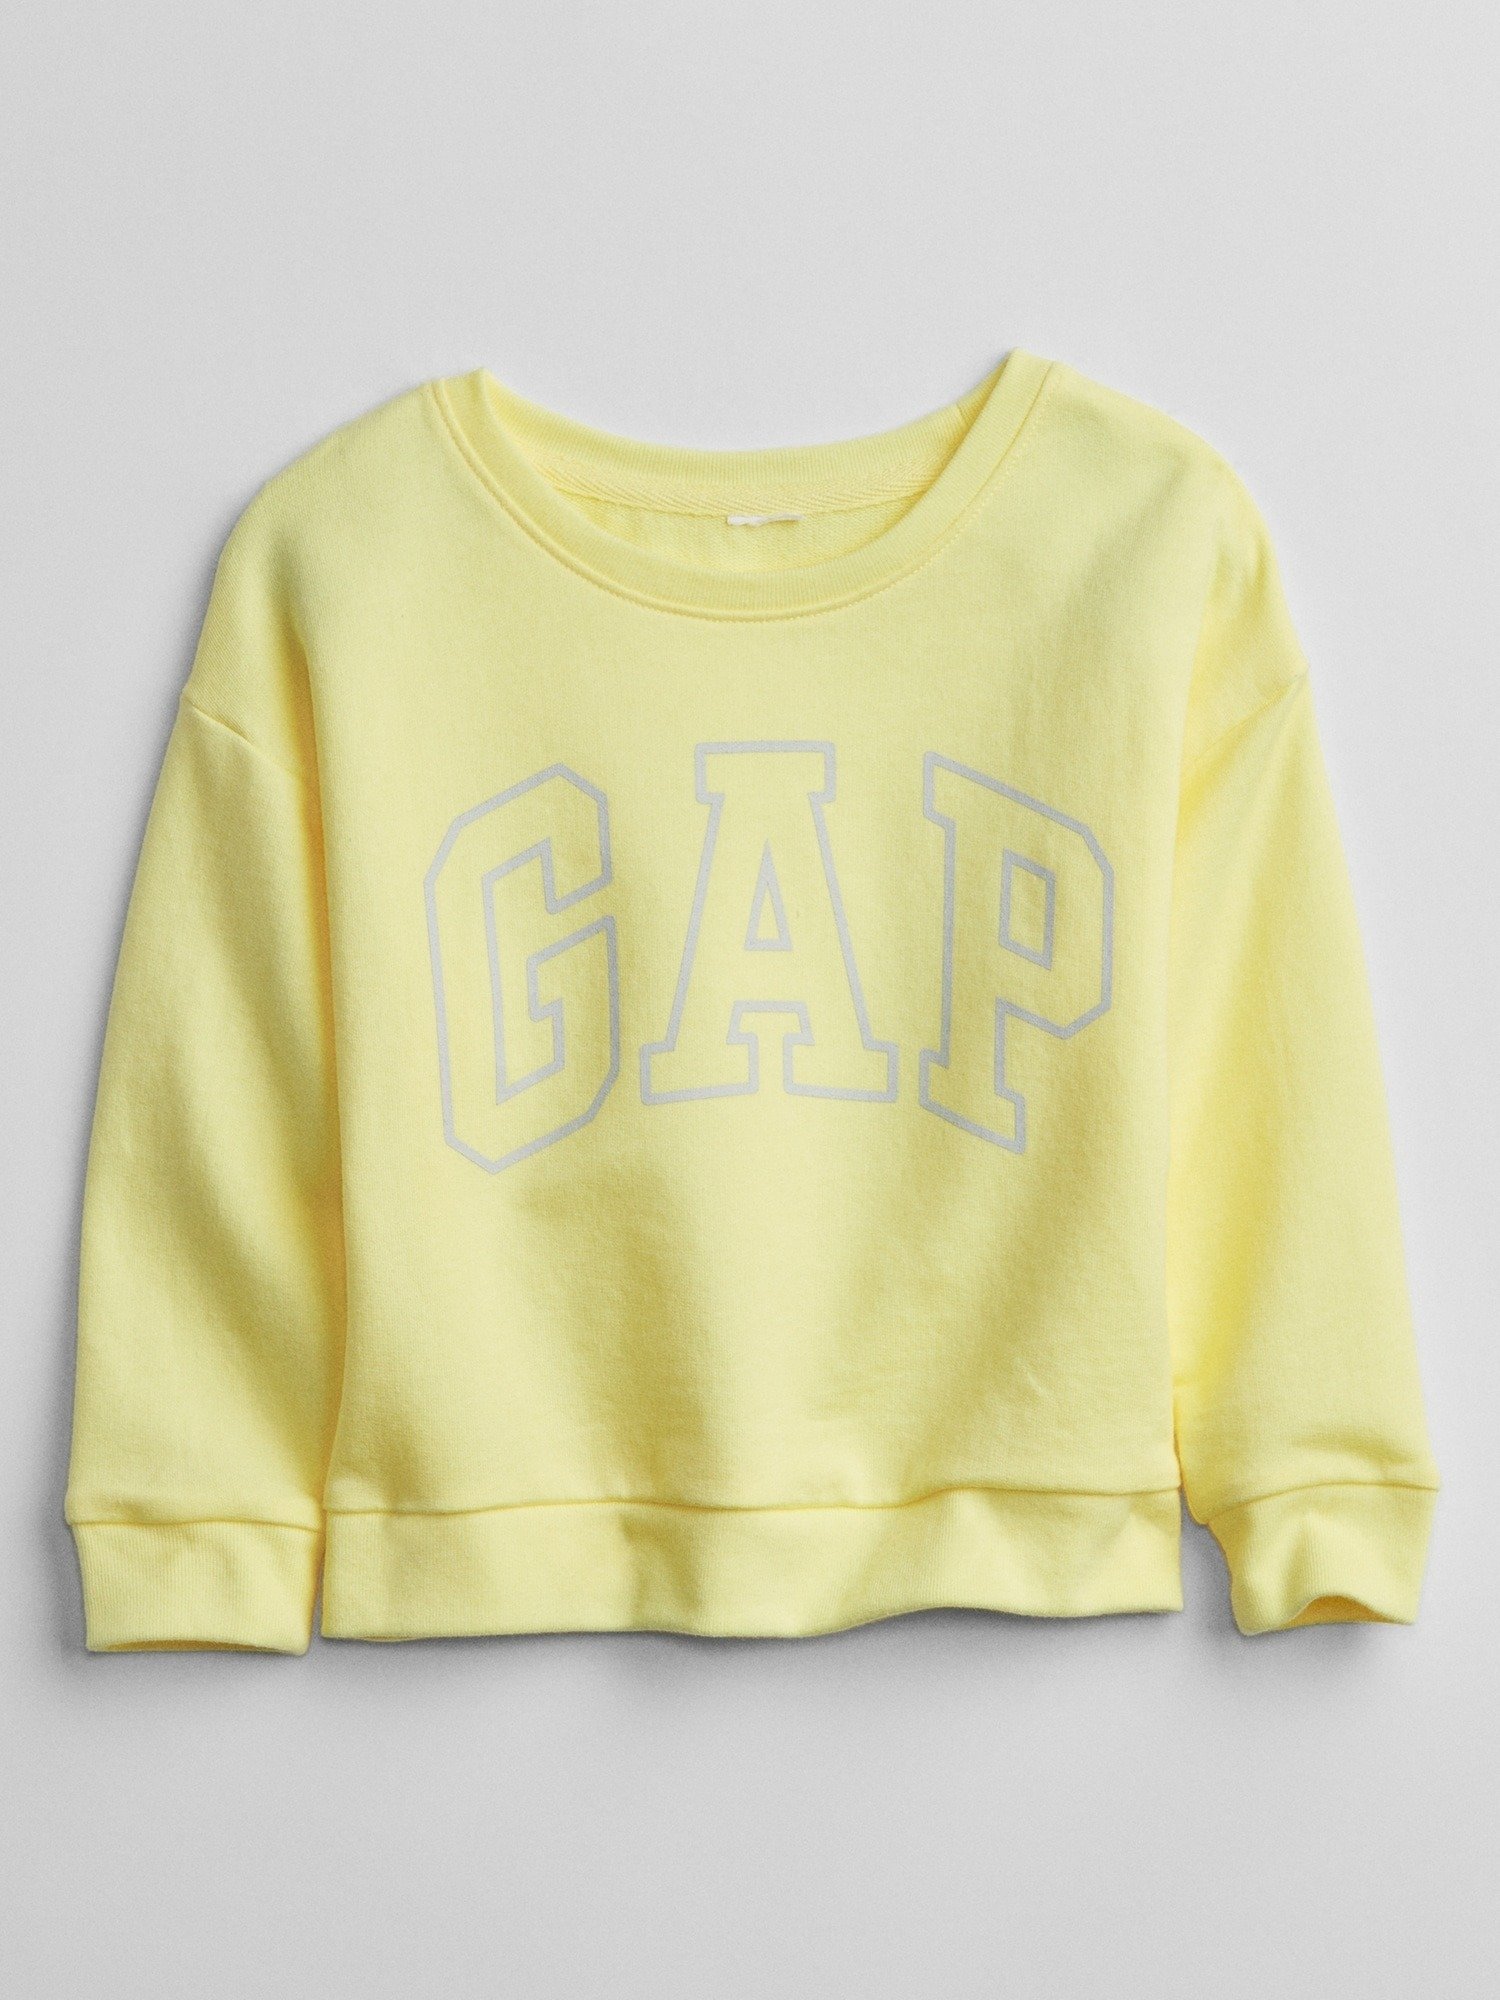 Gap Logo Düz Yaka Sweatshirt product image